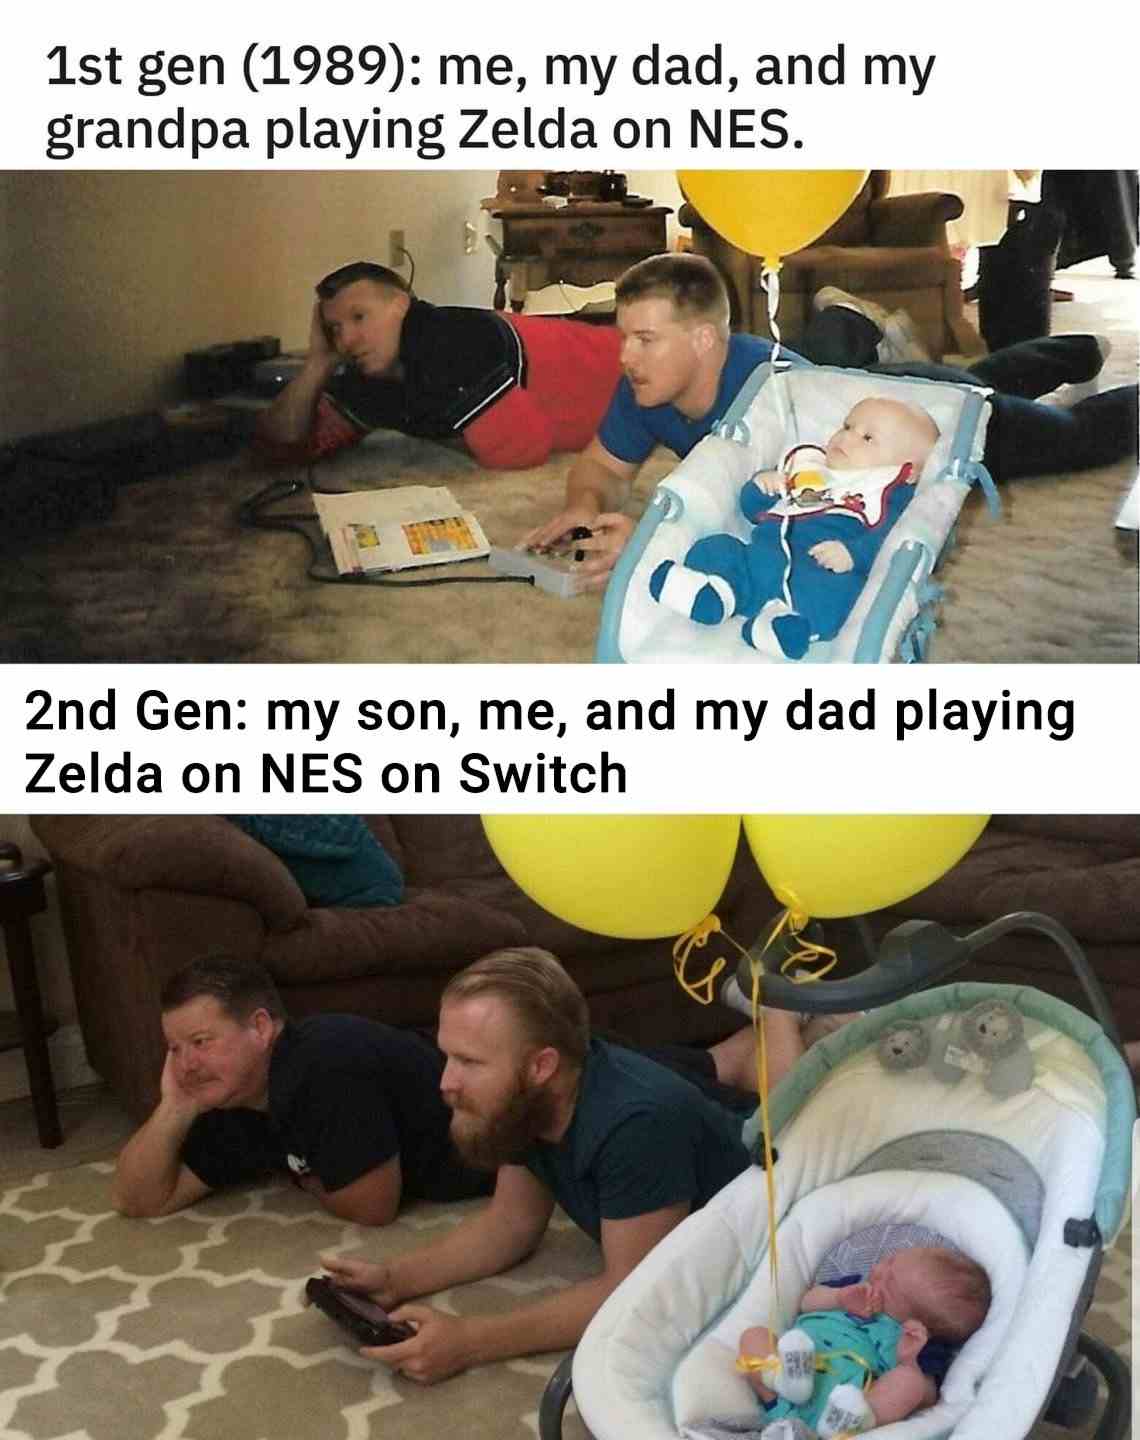 1st gen dad vs 2nd gen